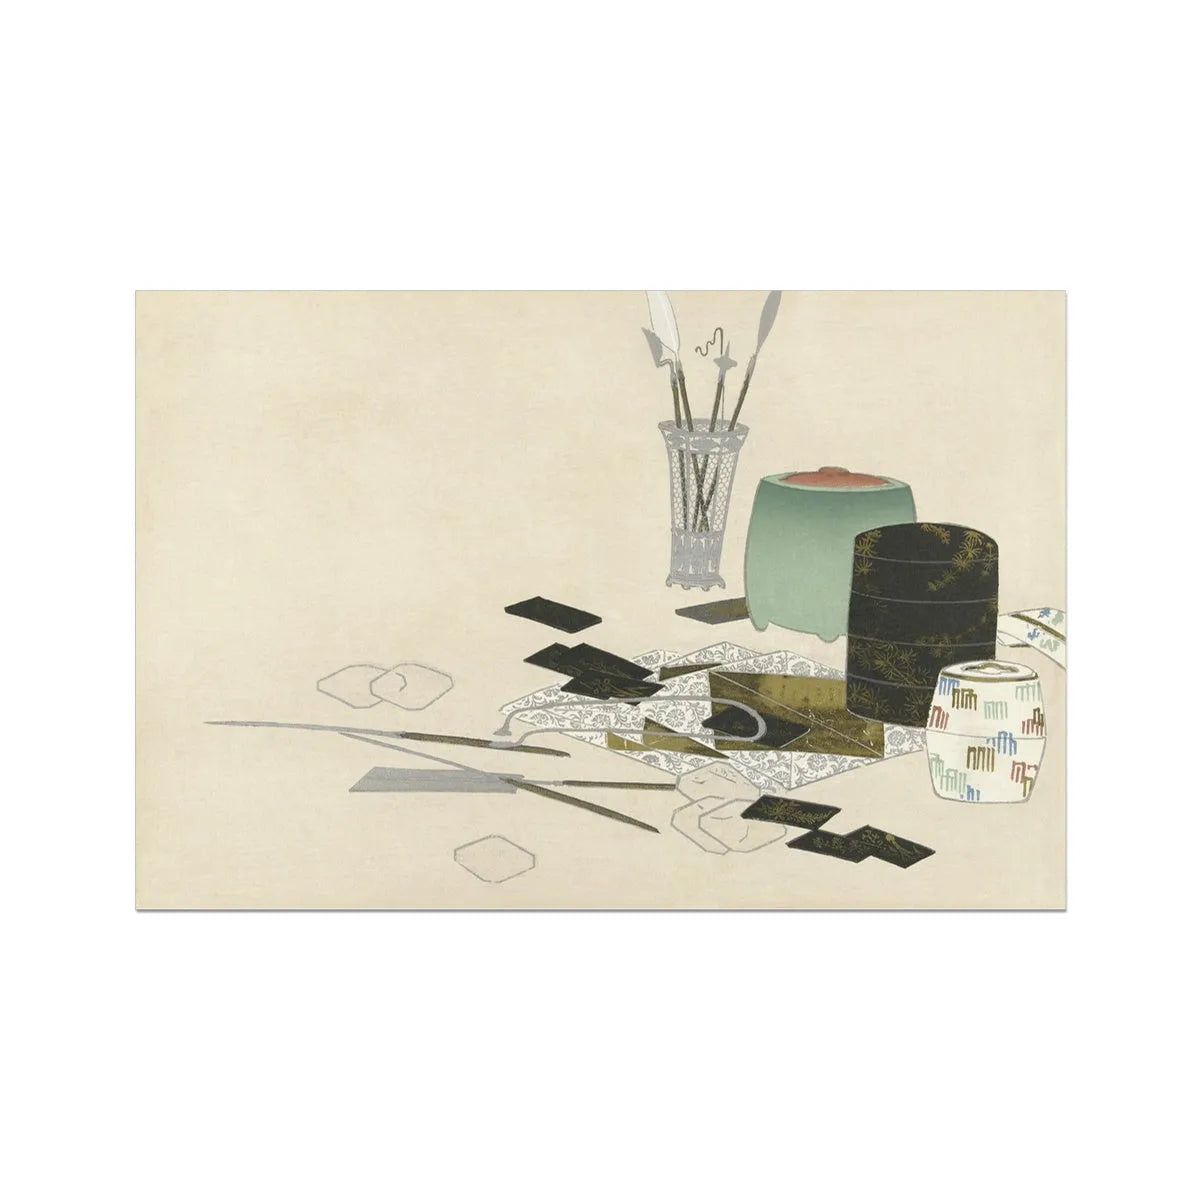 Art Supplies By Kamisaka Sekka Fine Art Print - 36’x24’ - Posters Prints & Visual Artwork - Aesthetic Art